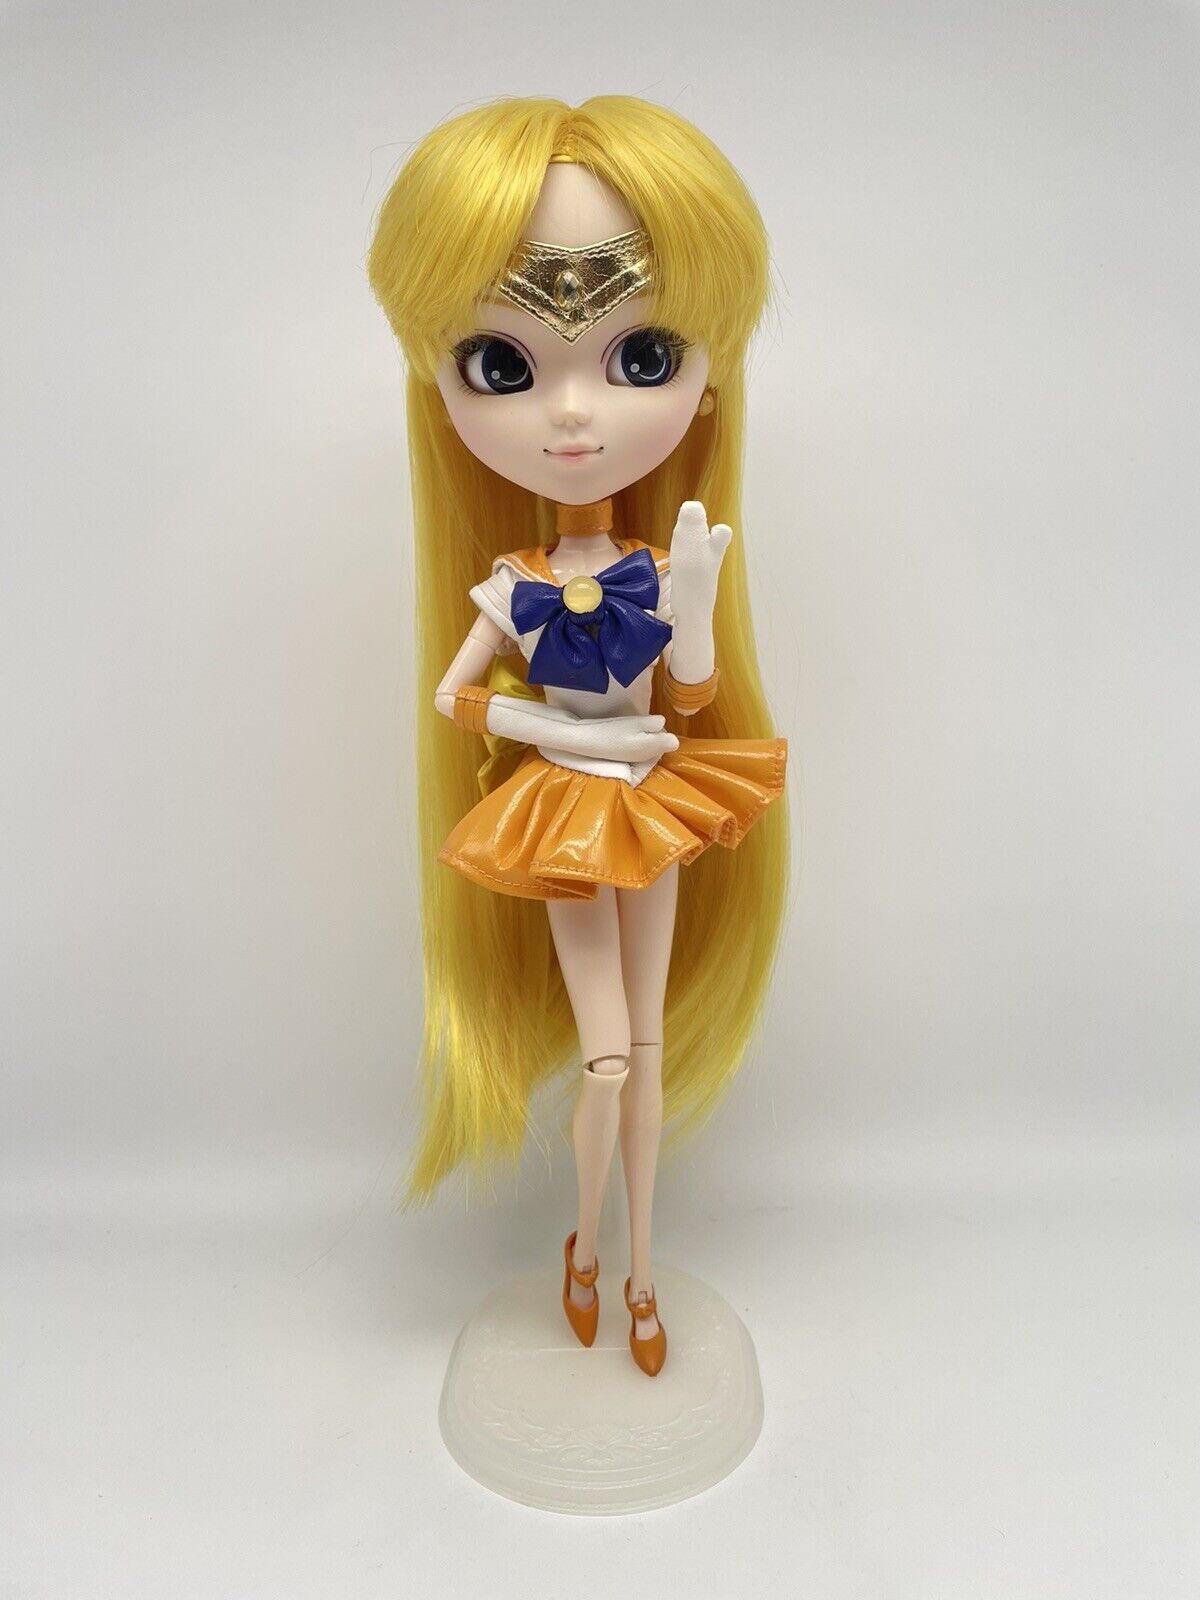 Bandai Exclusive Pullip Sailor Venus Doll from Japan